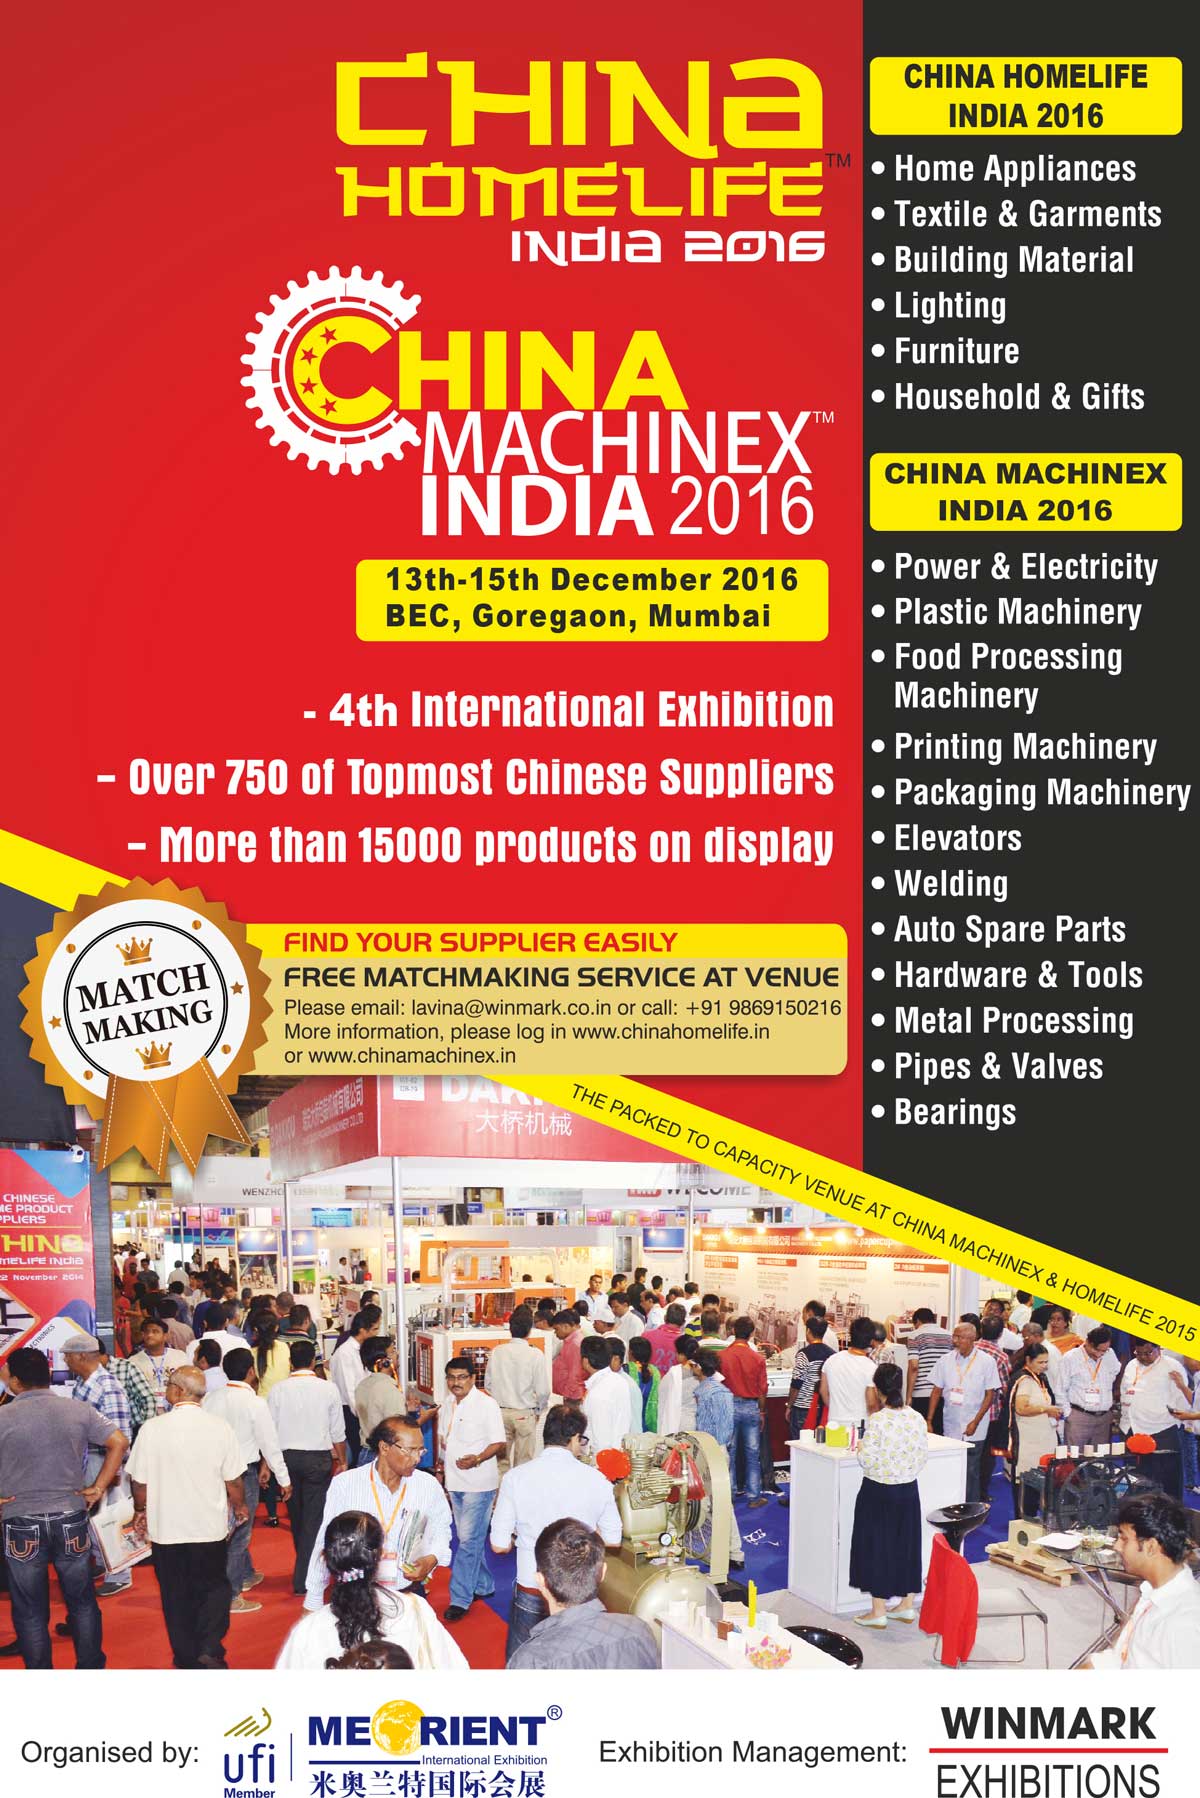 - China Homelife India 2016, Manufacturers in Mumbai